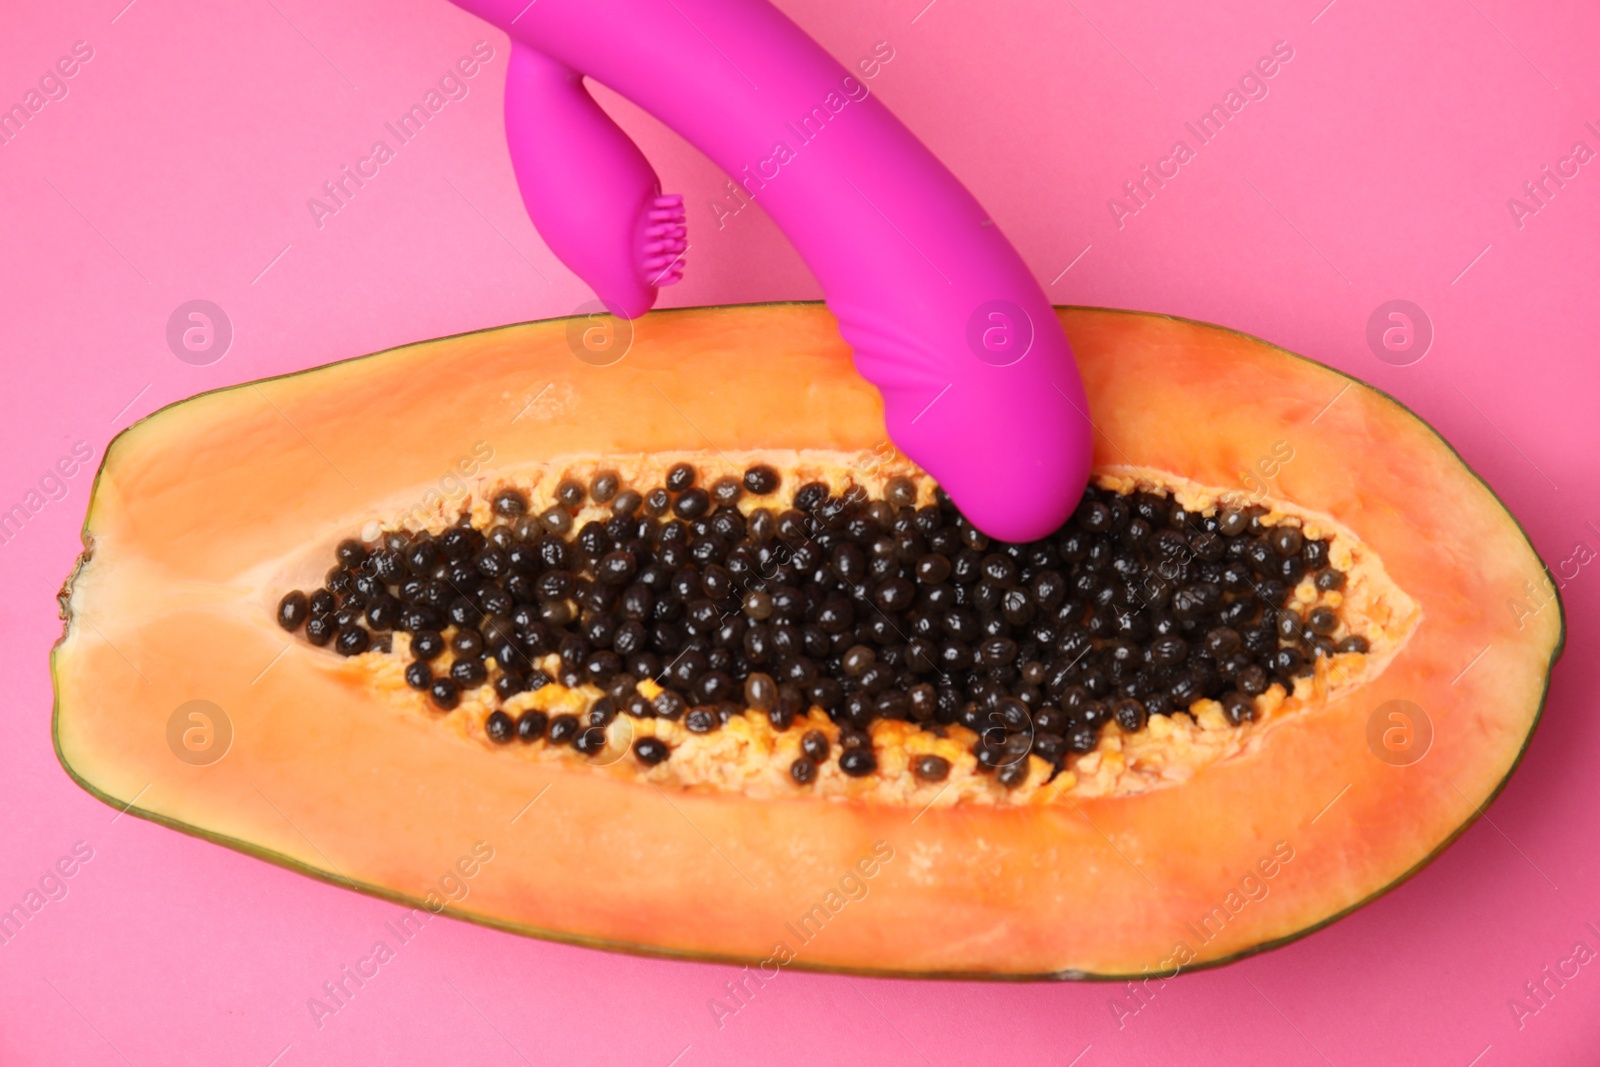 Photo of Half of papaya and purple vibrator on pink background, flat lay. Sex concept